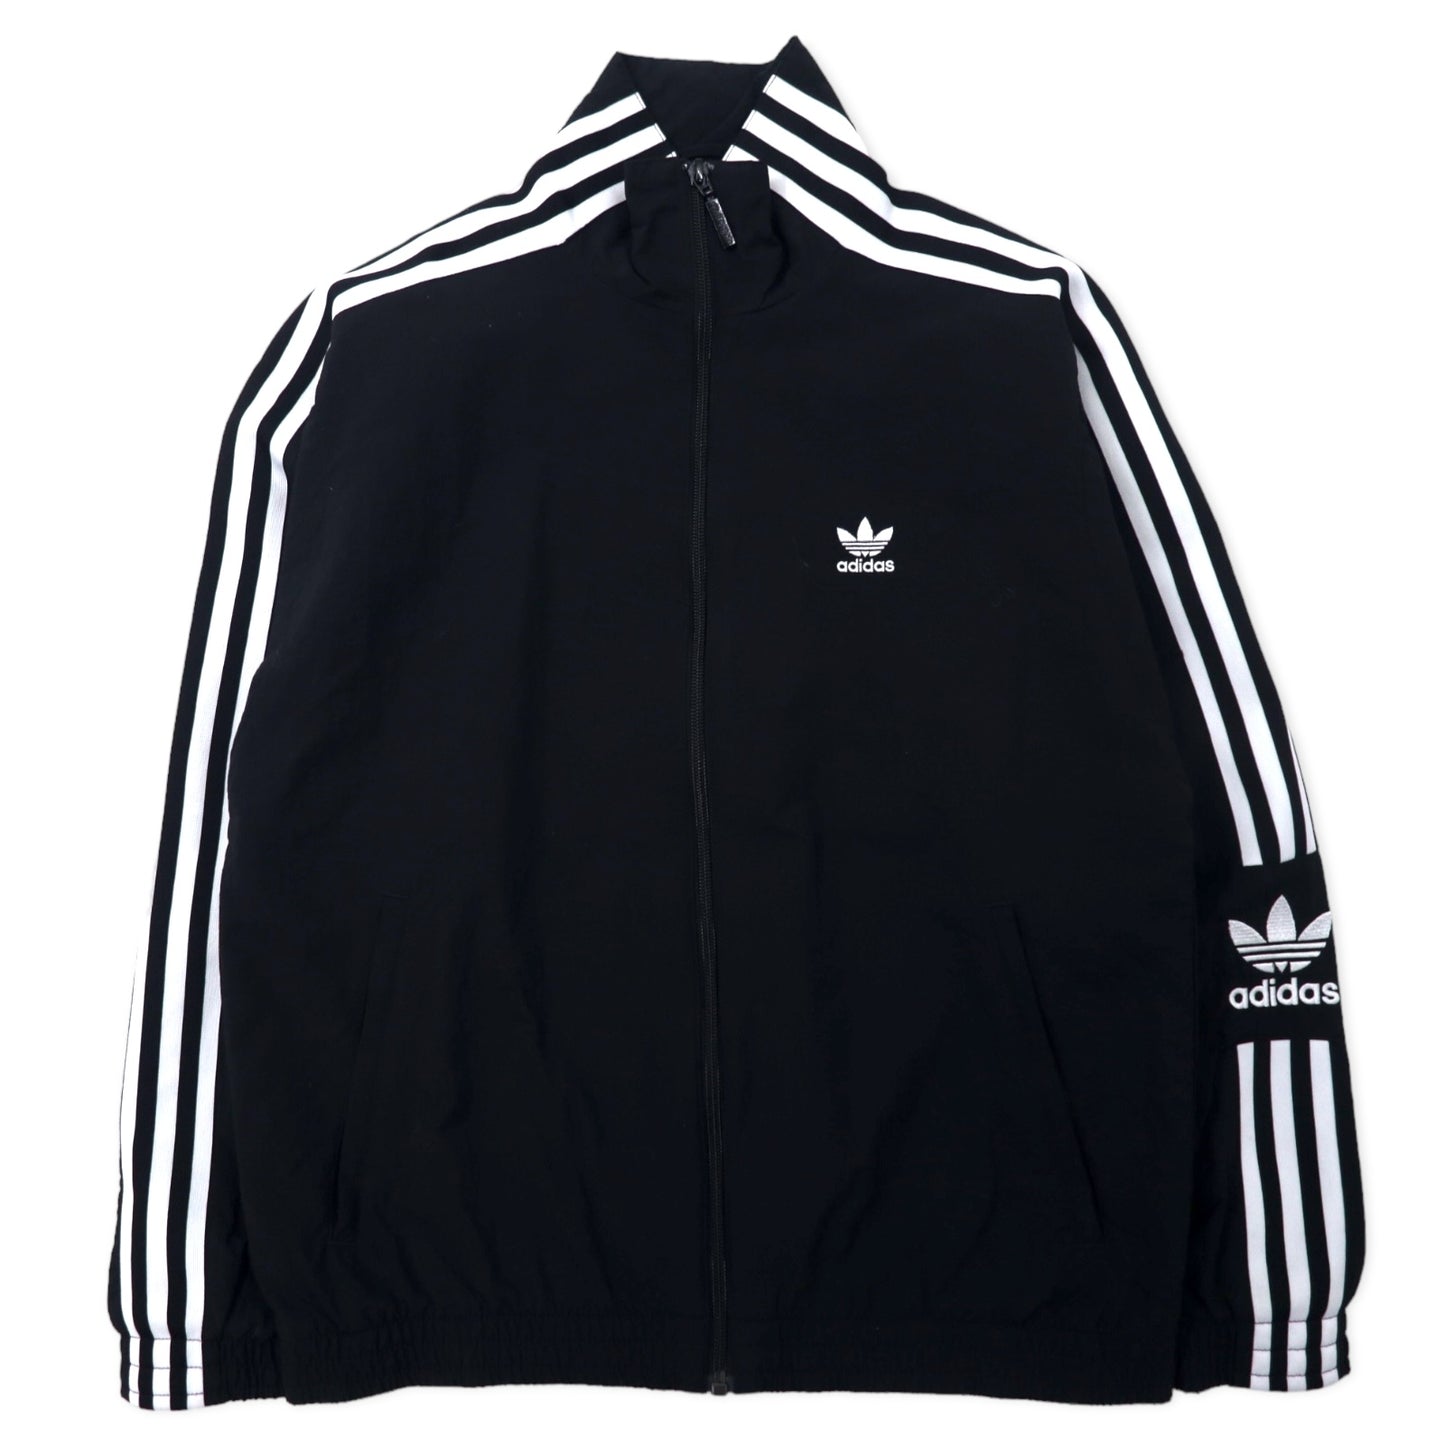 Adidas Originals Track Jacket Jersey M Black Nylon 3 Striped ...